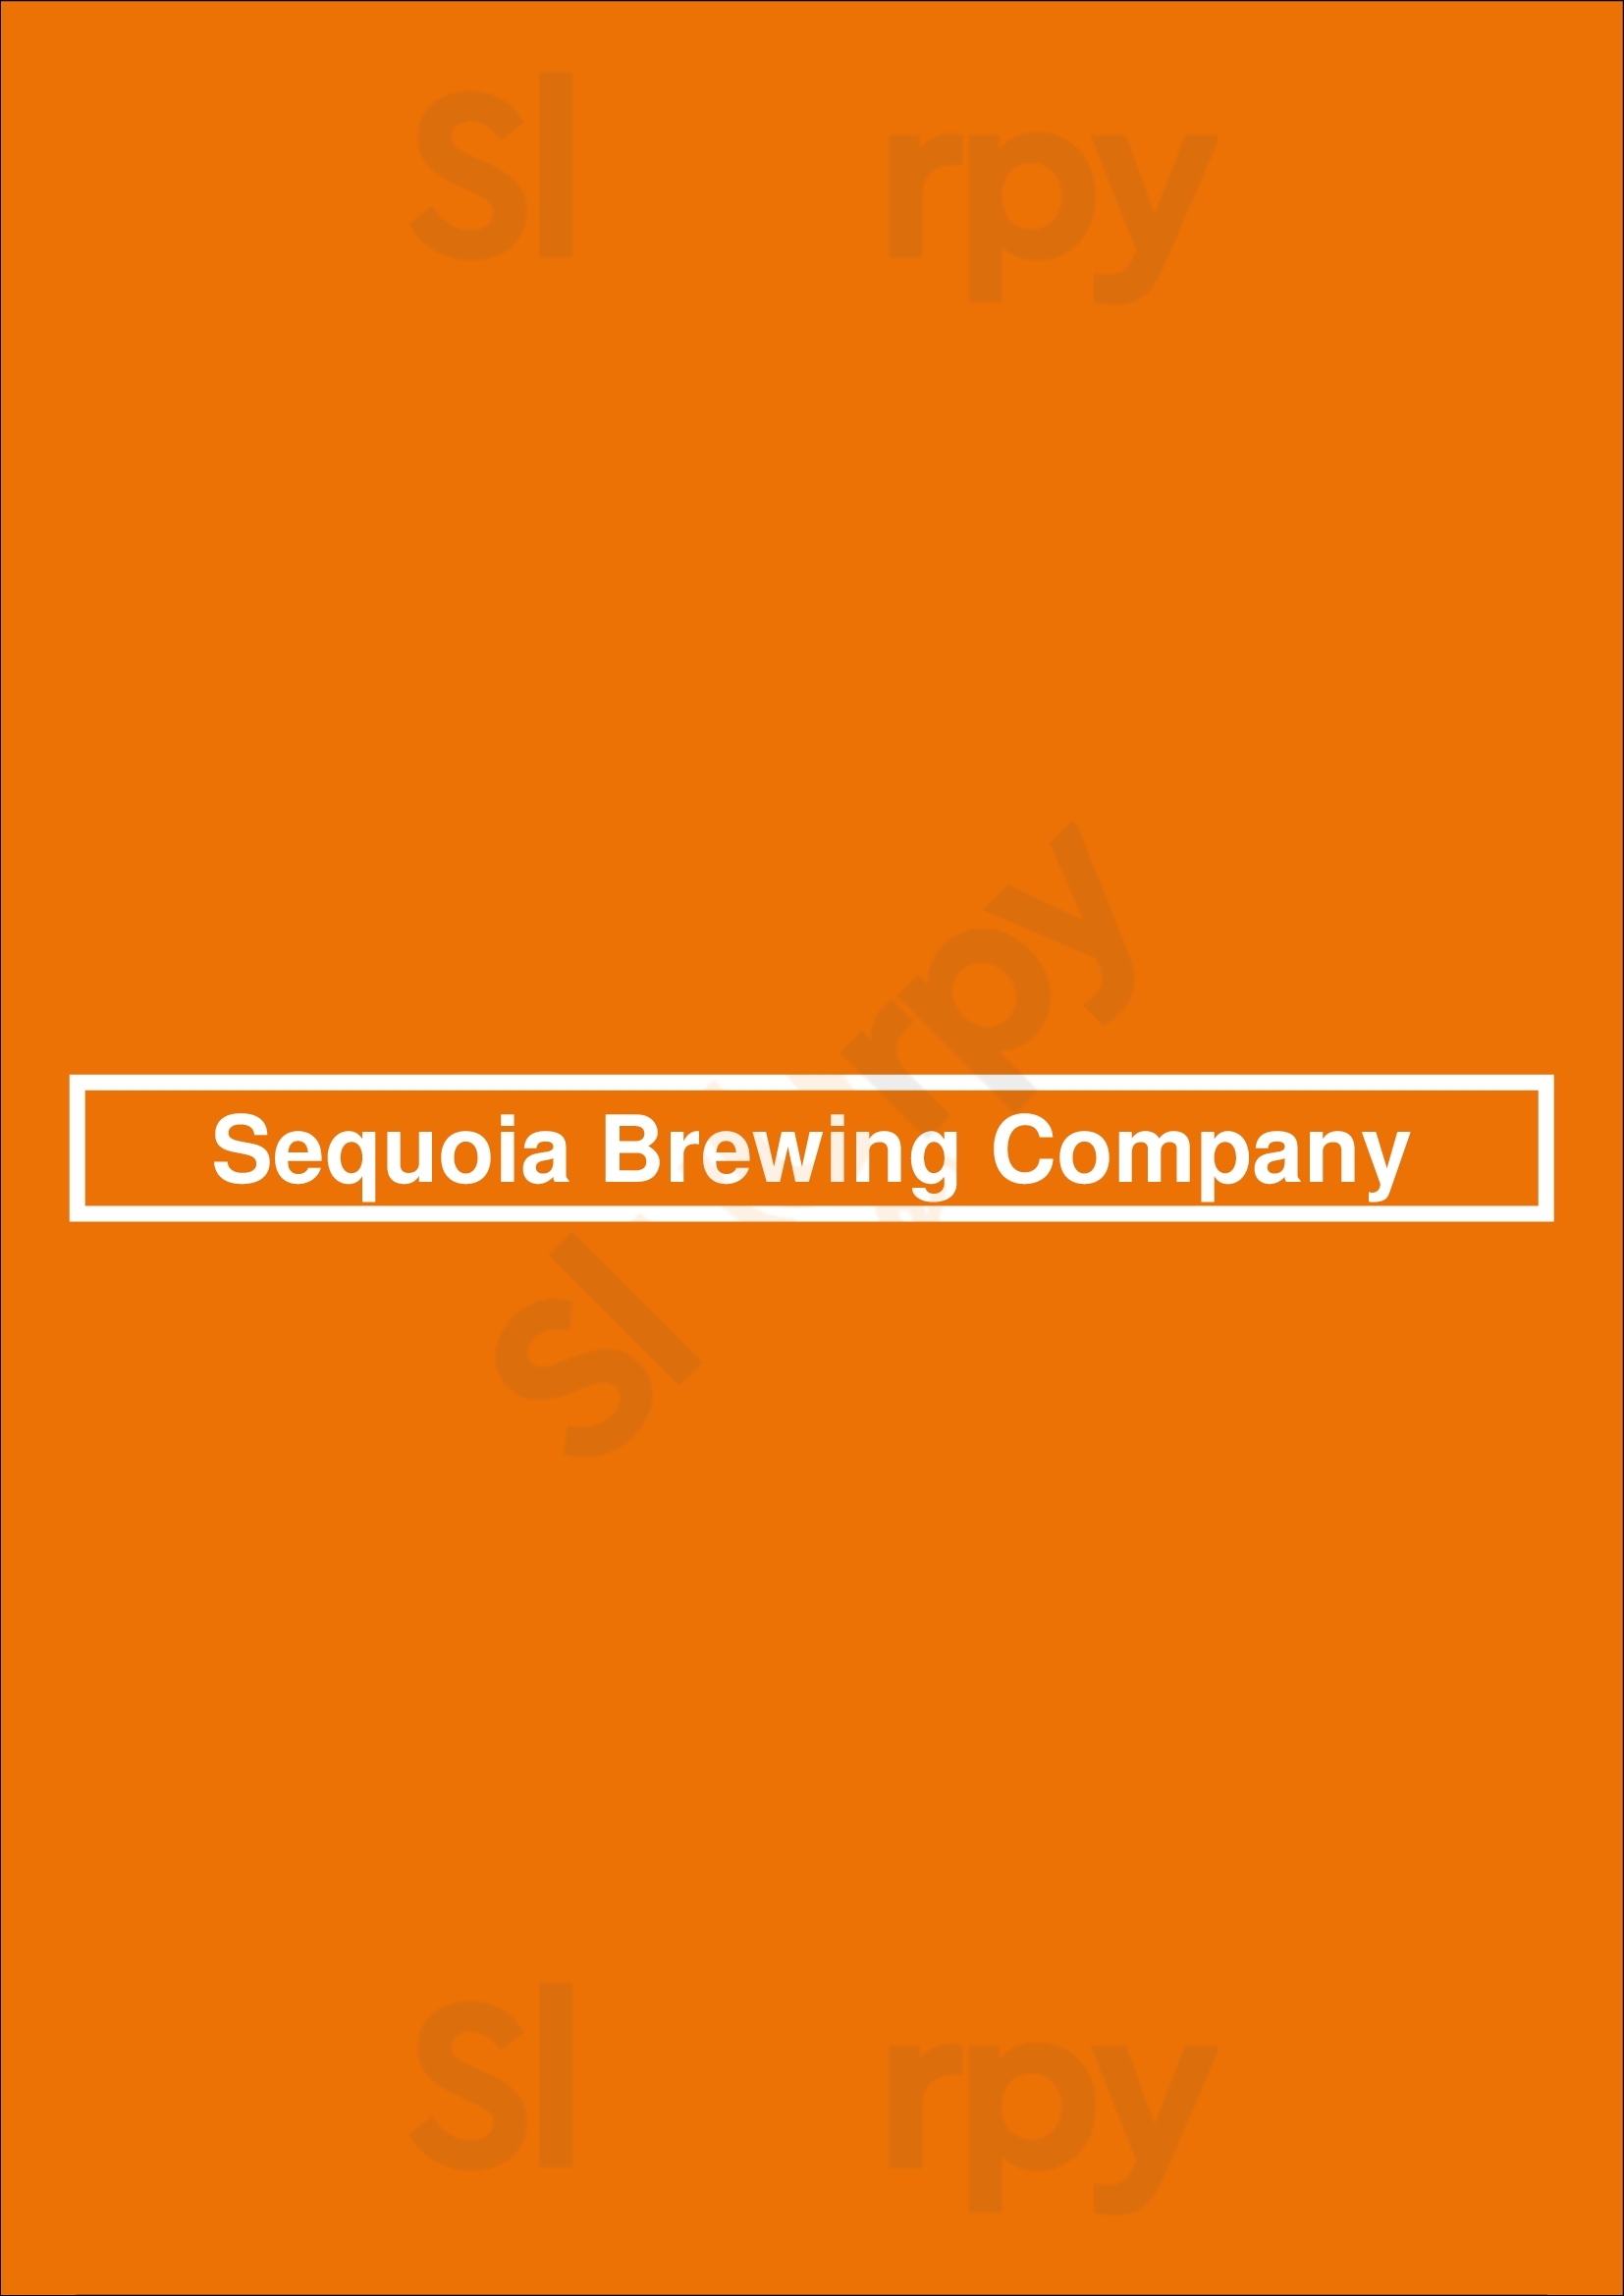 Sequoia Brewing Company Fresno Menu - 1